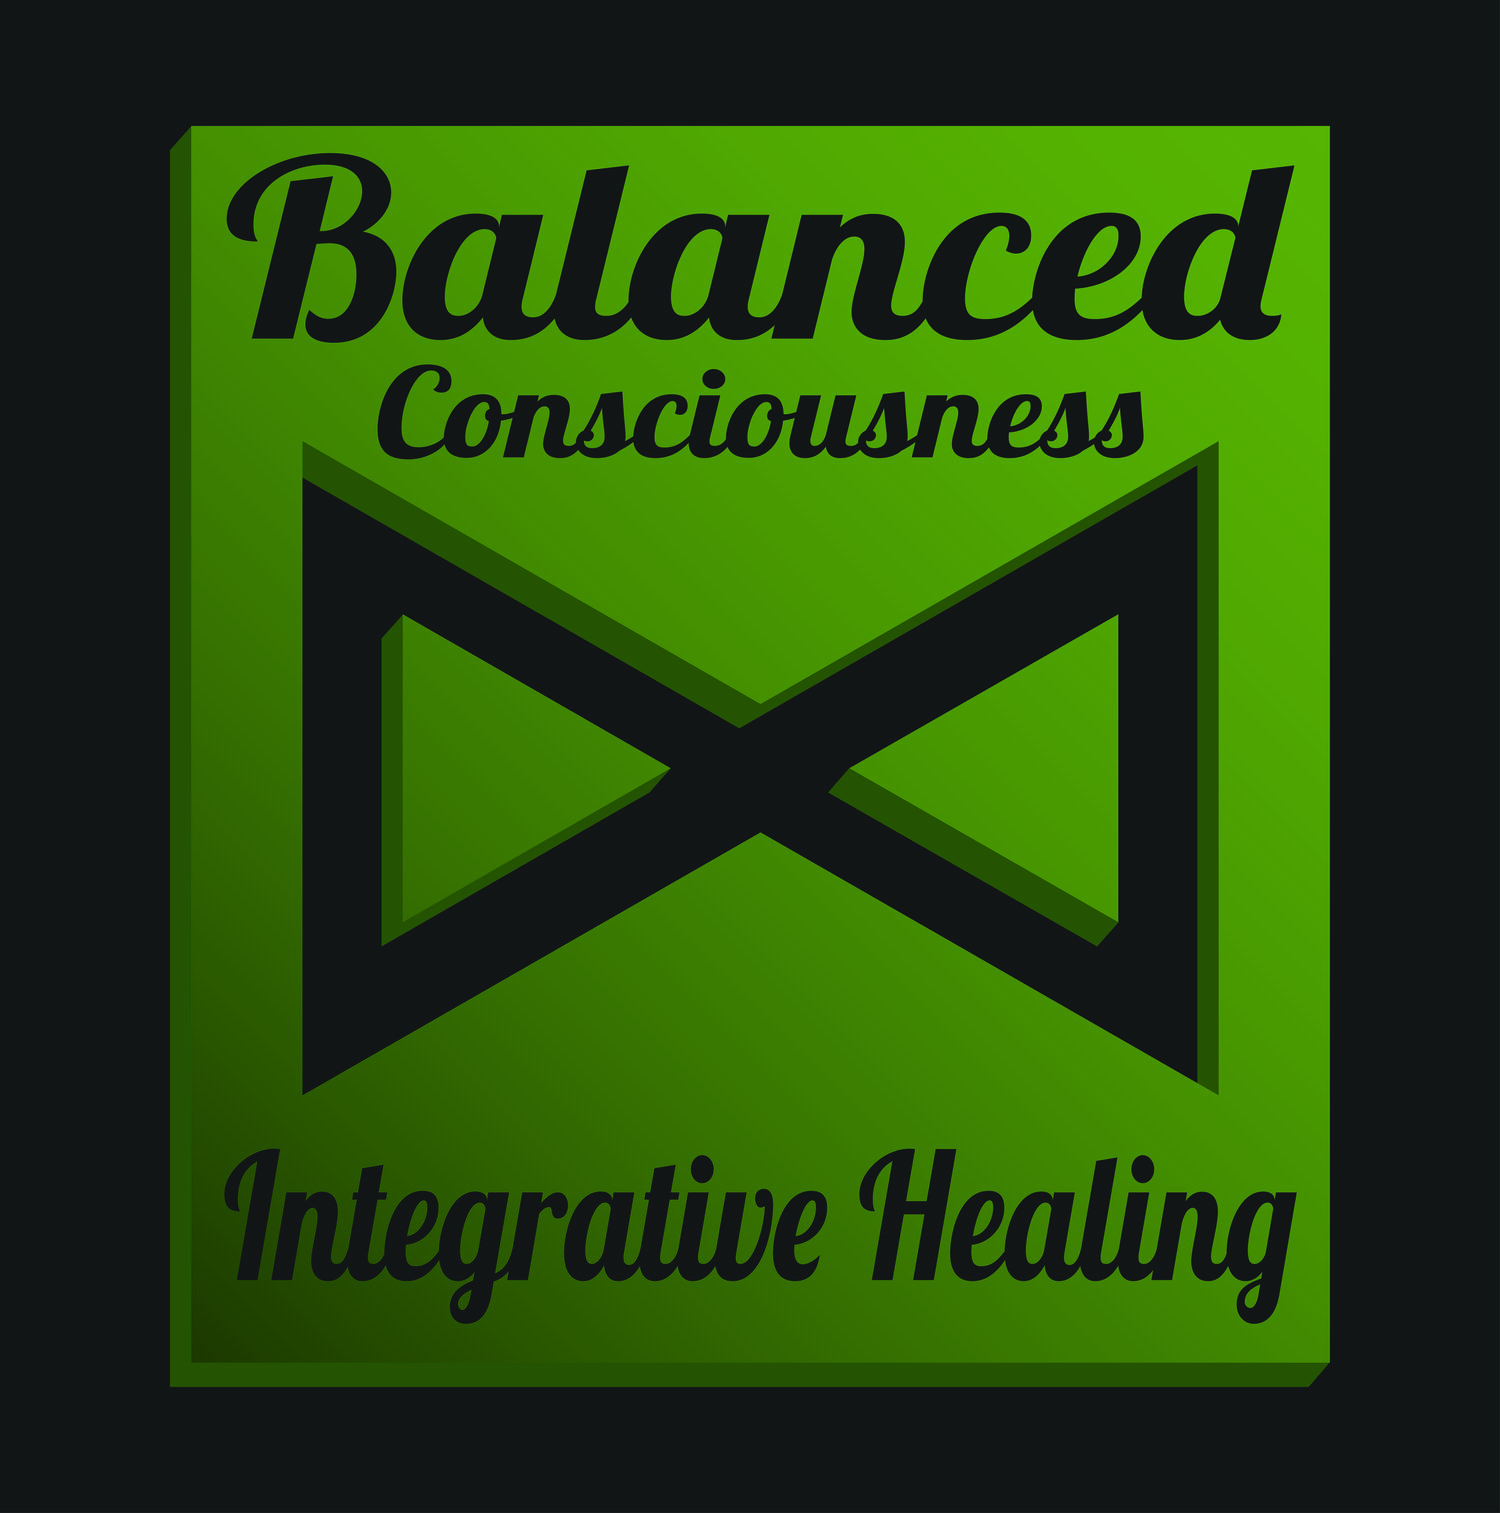 Balanced Consciousness Integrative Healing